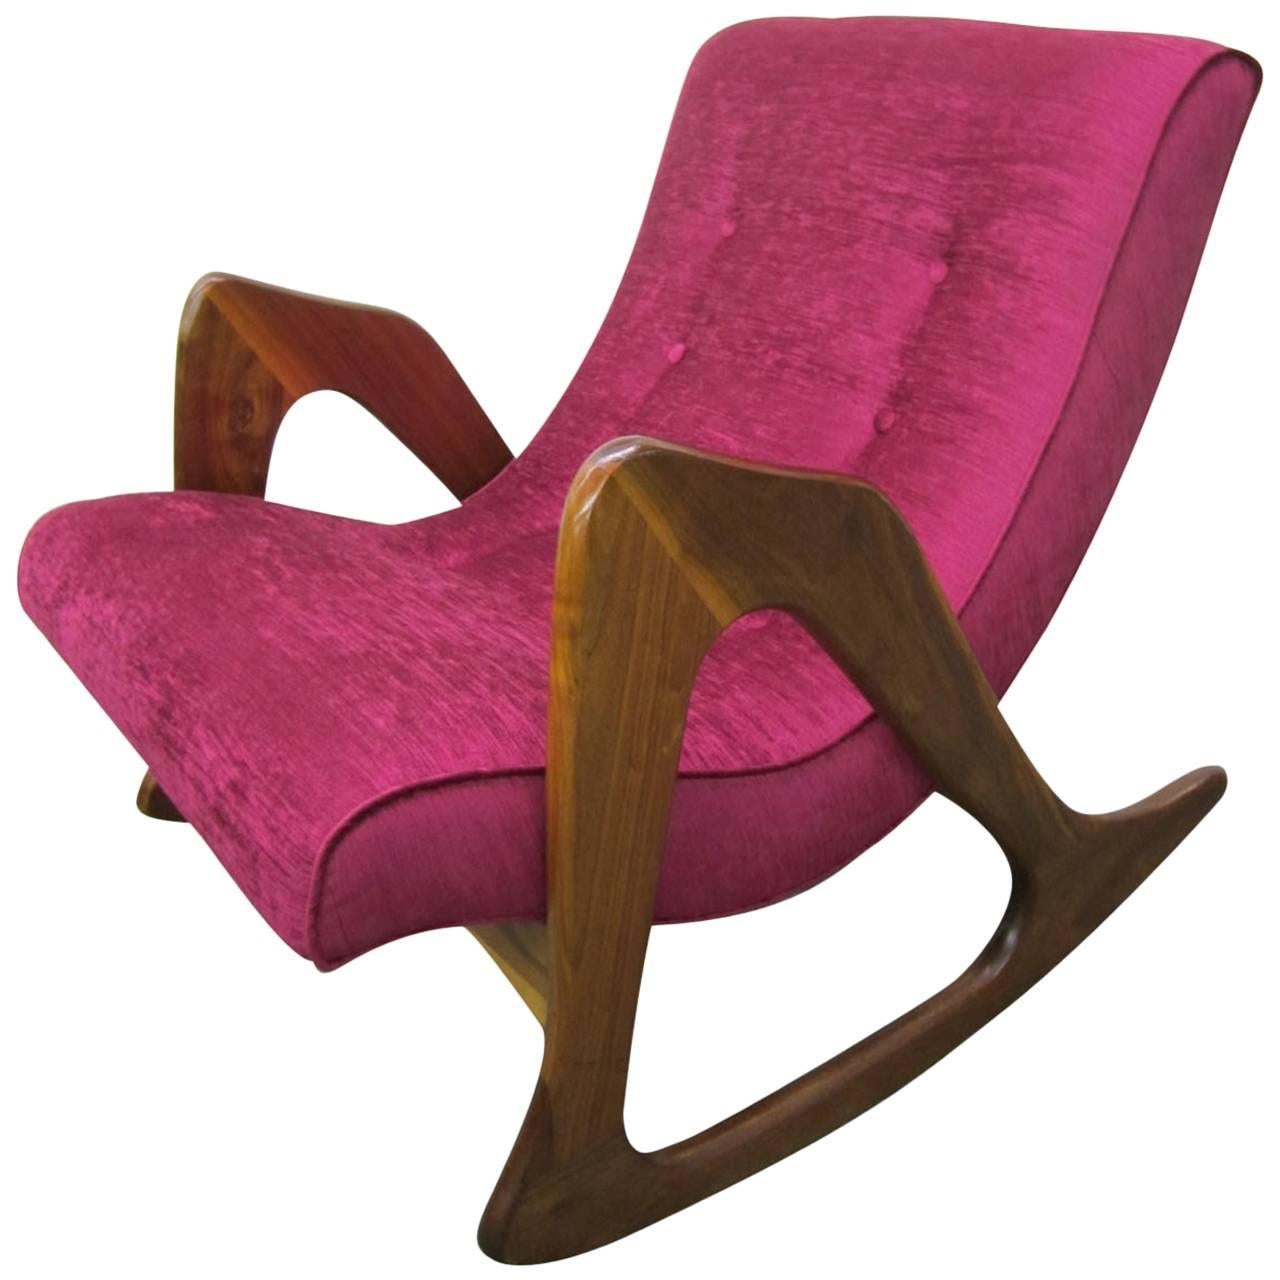 Adrian Pearsall Sculptural Rocking Chair for Craft Associates Mid-Century Modern